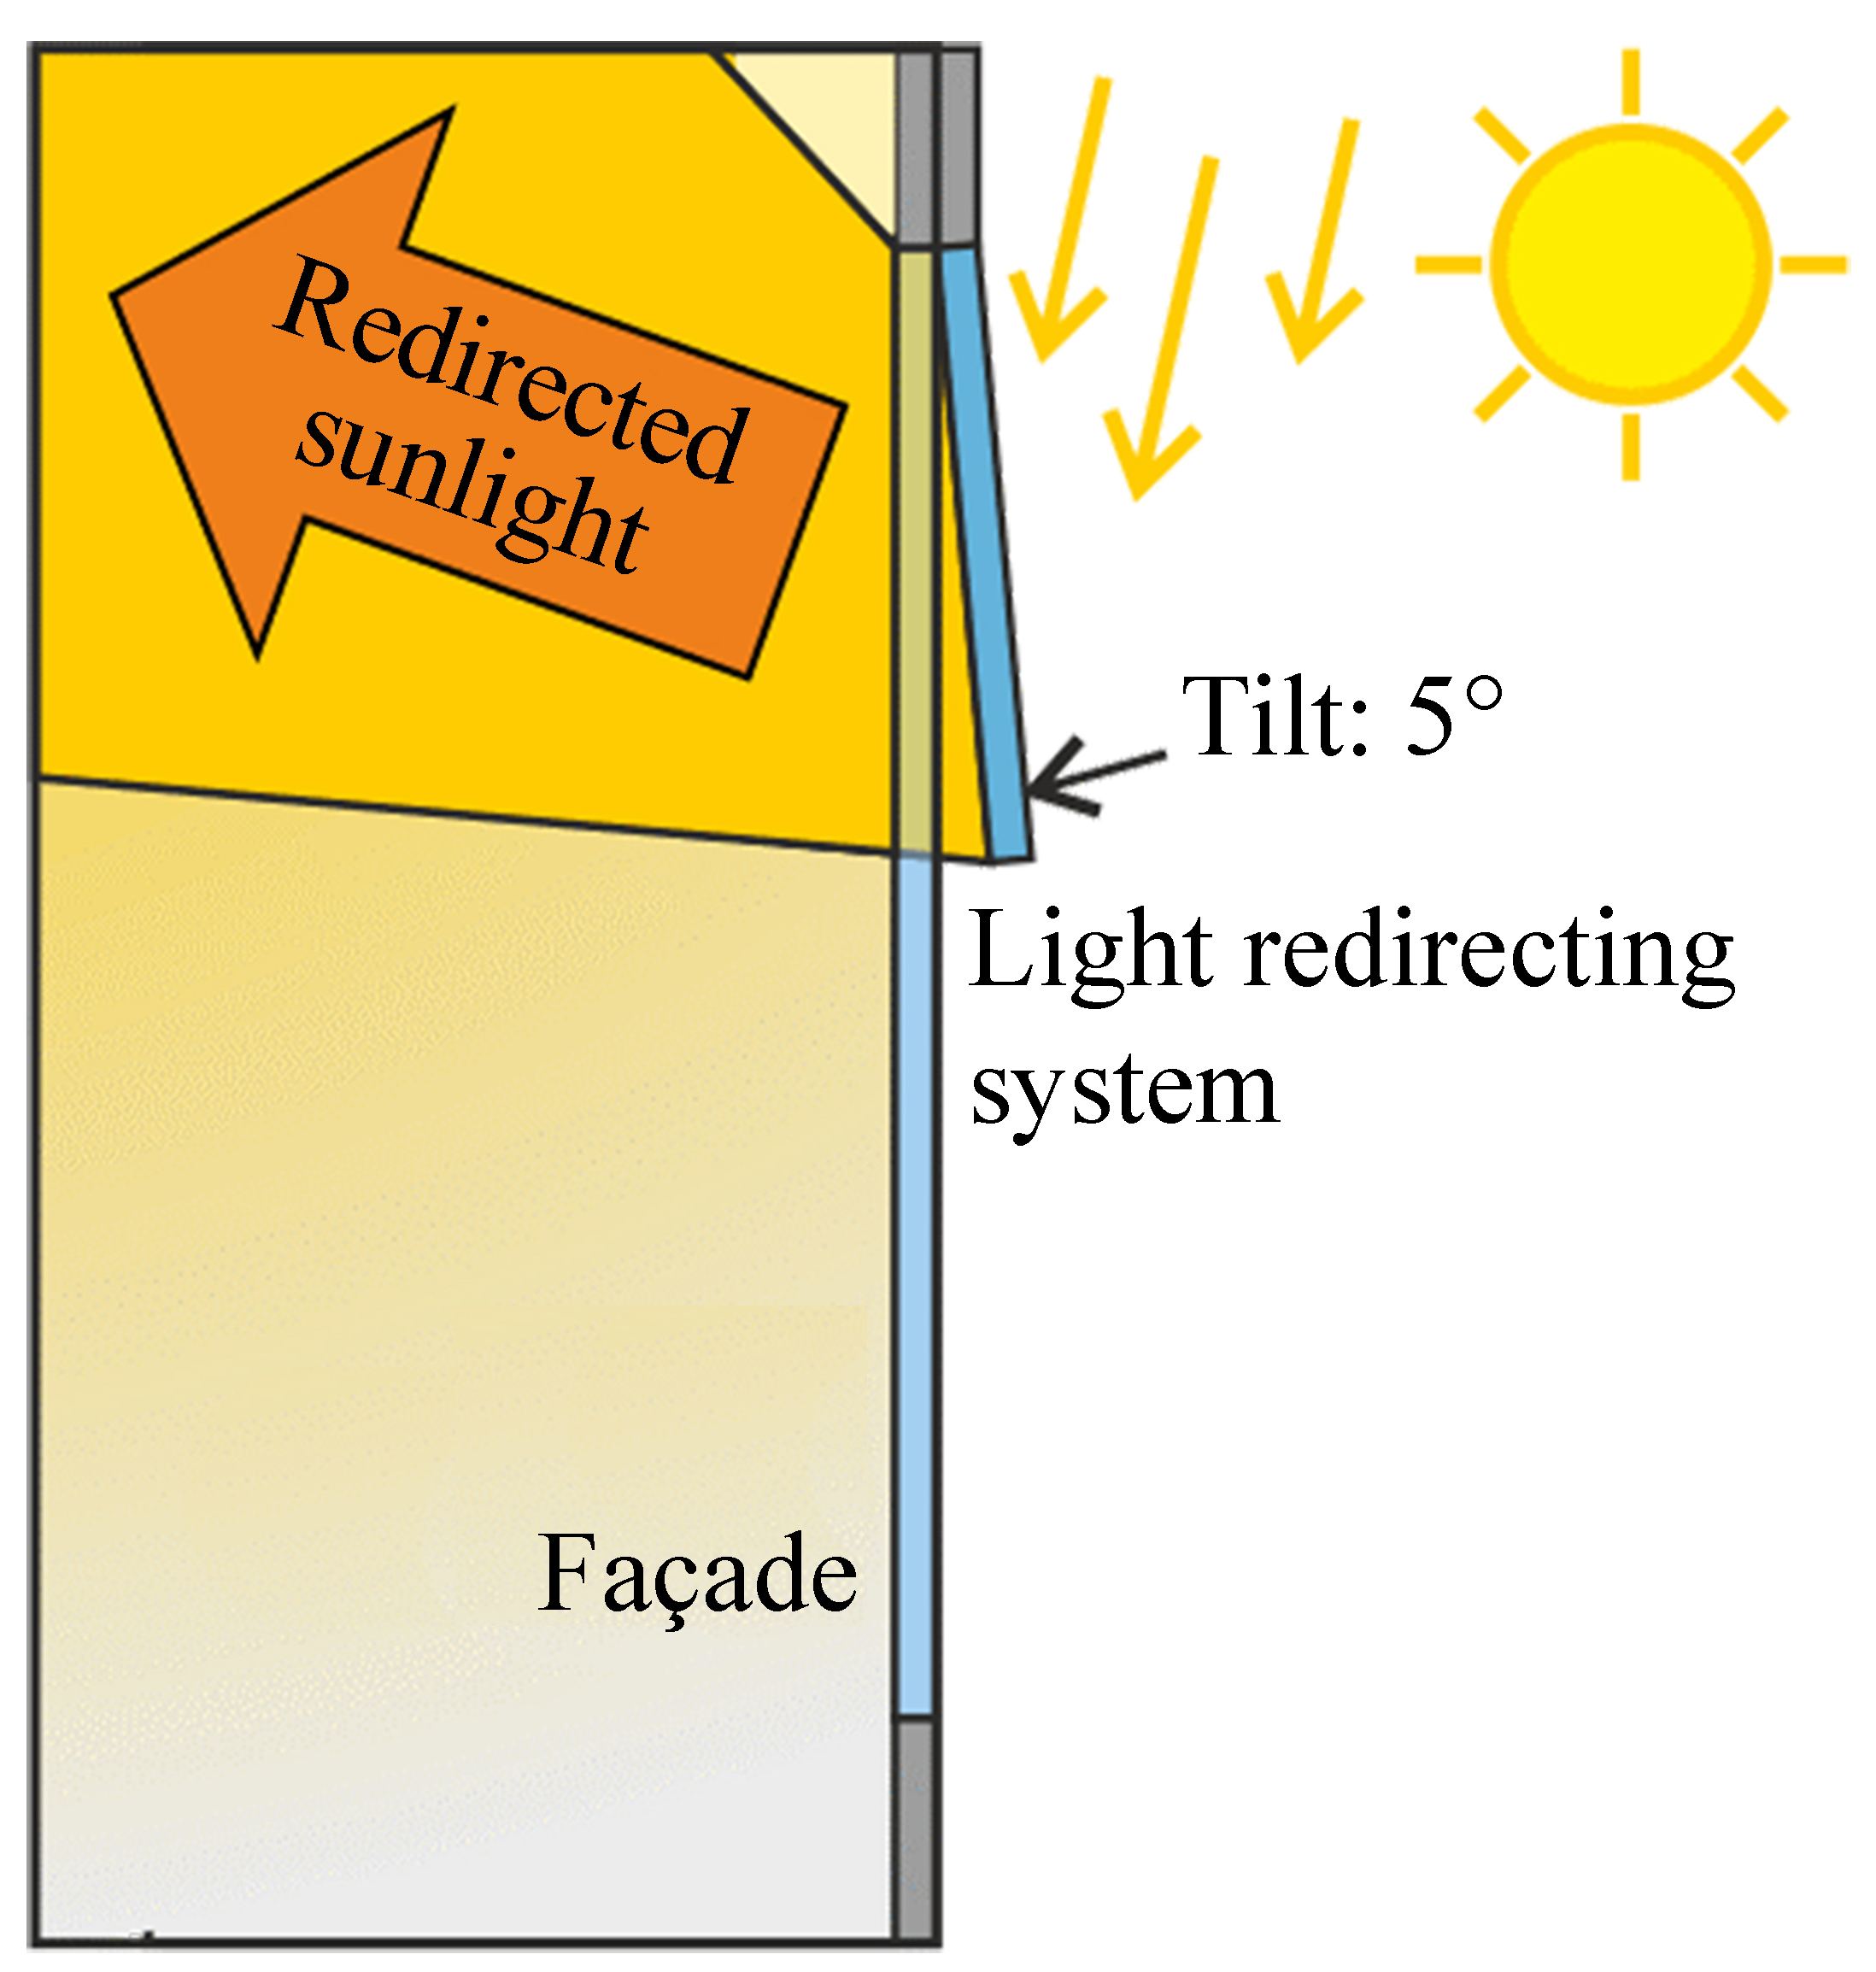 Tilted sunlighting component improves light redirection for solar altitude > 70° [13].